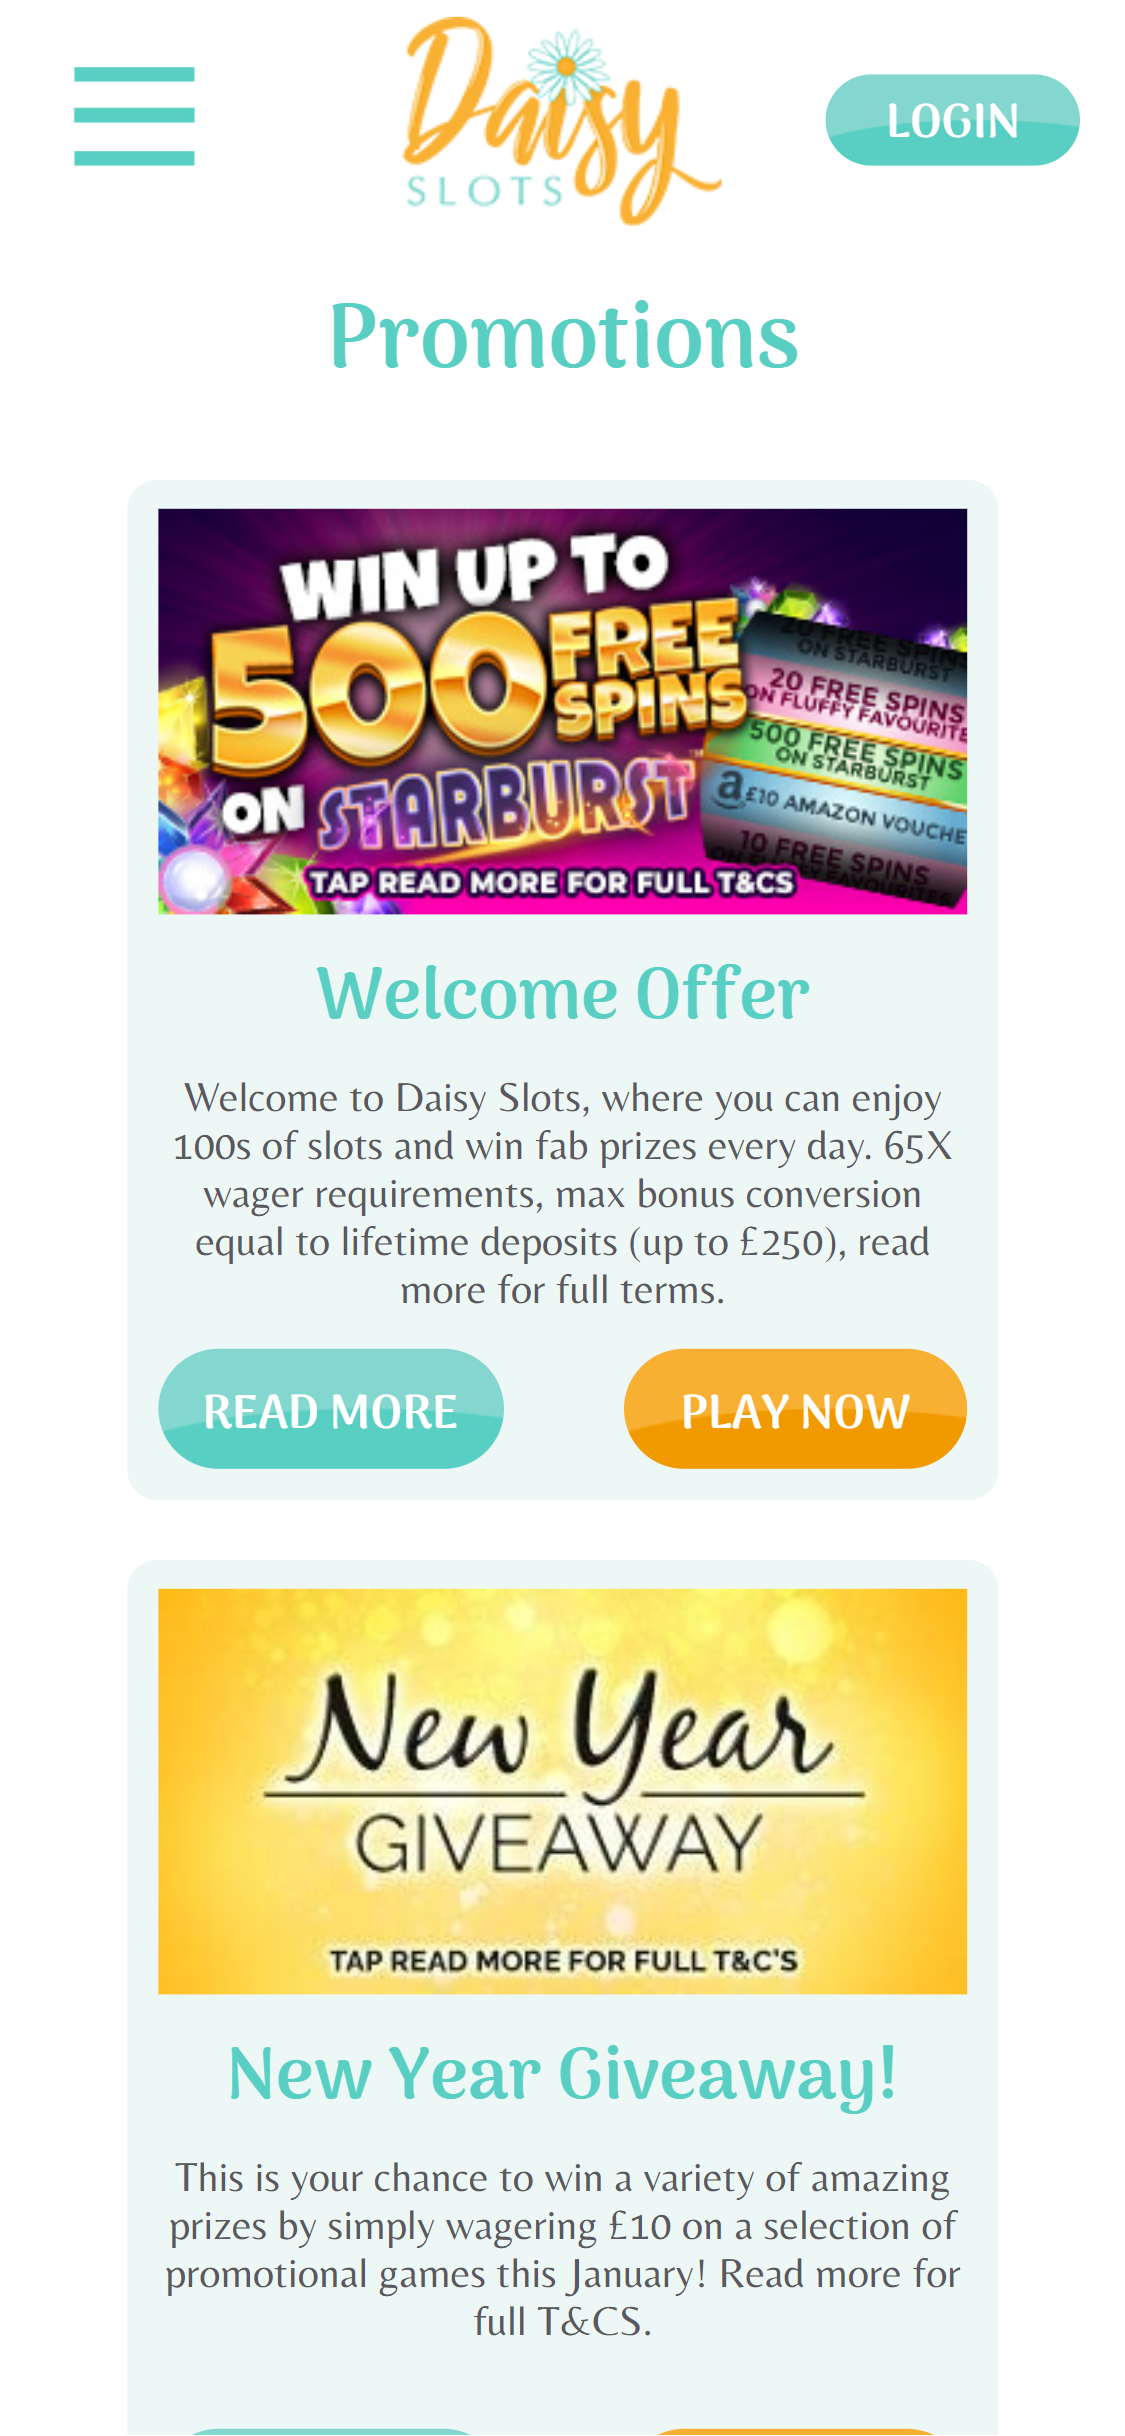 Daisy Slots Casino Mobile No Deposit Bonus Review